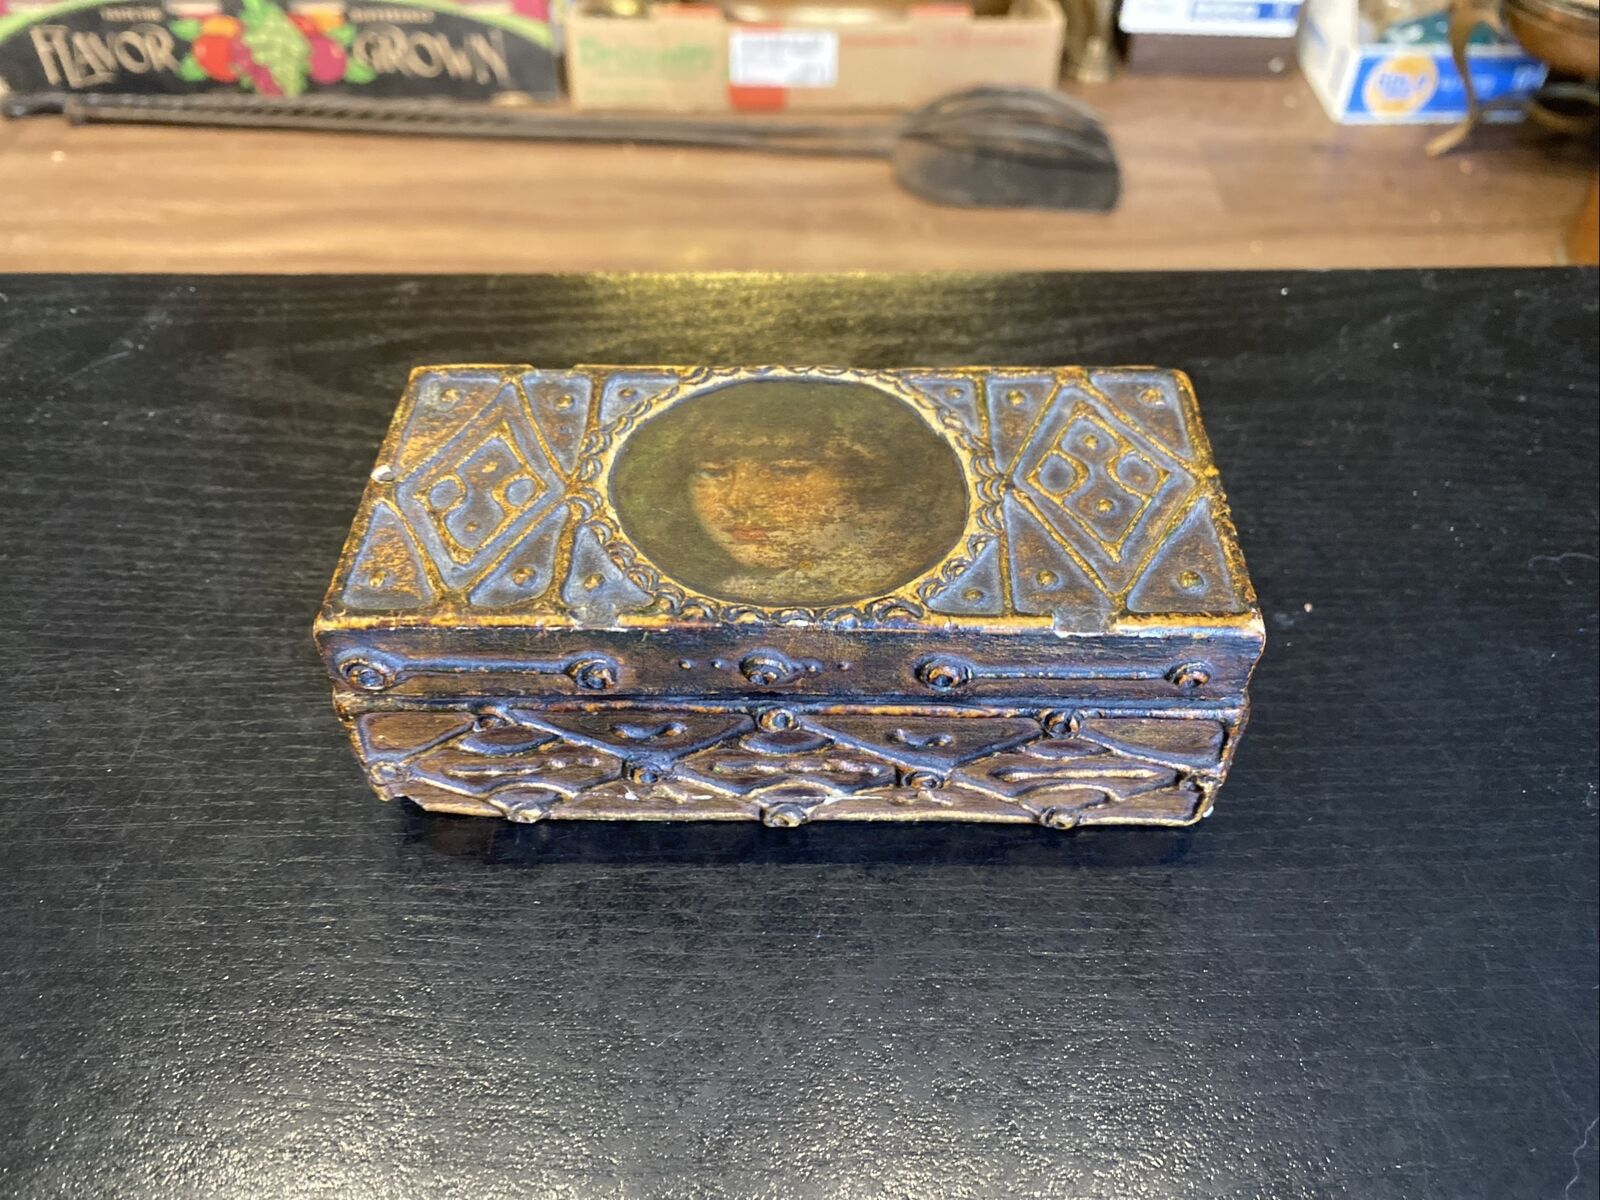 Small Antique Fratelli Paoletti Firenze Italy Wooden Jewelry Casket Trinket Box